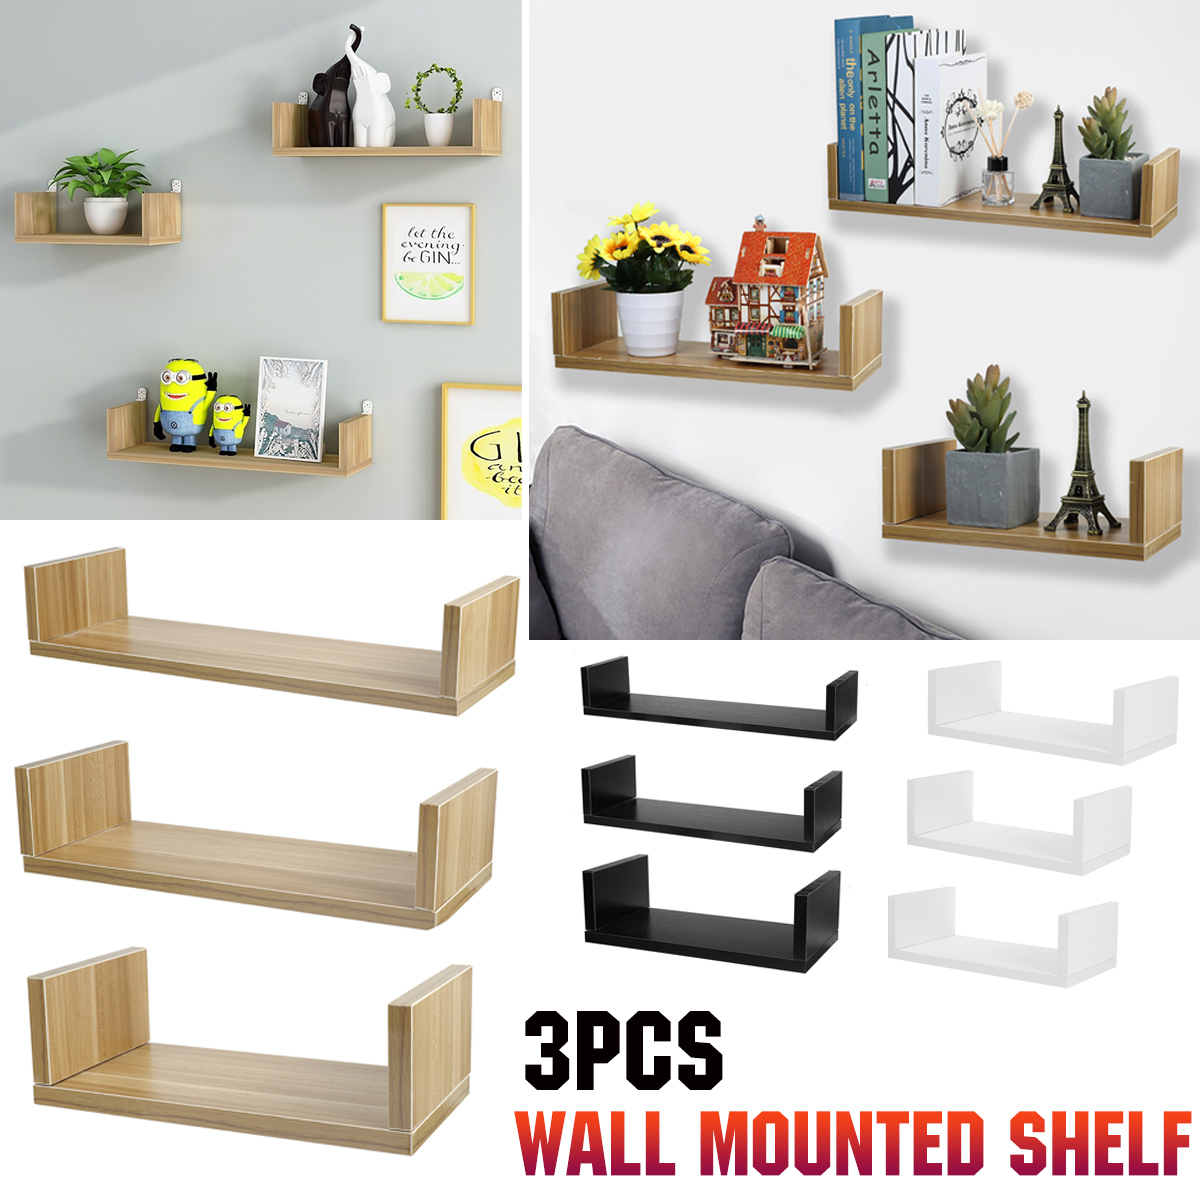 U Shape Wall Mounted Storage Shelves Room Display Floating Shelf Units MDF Wood